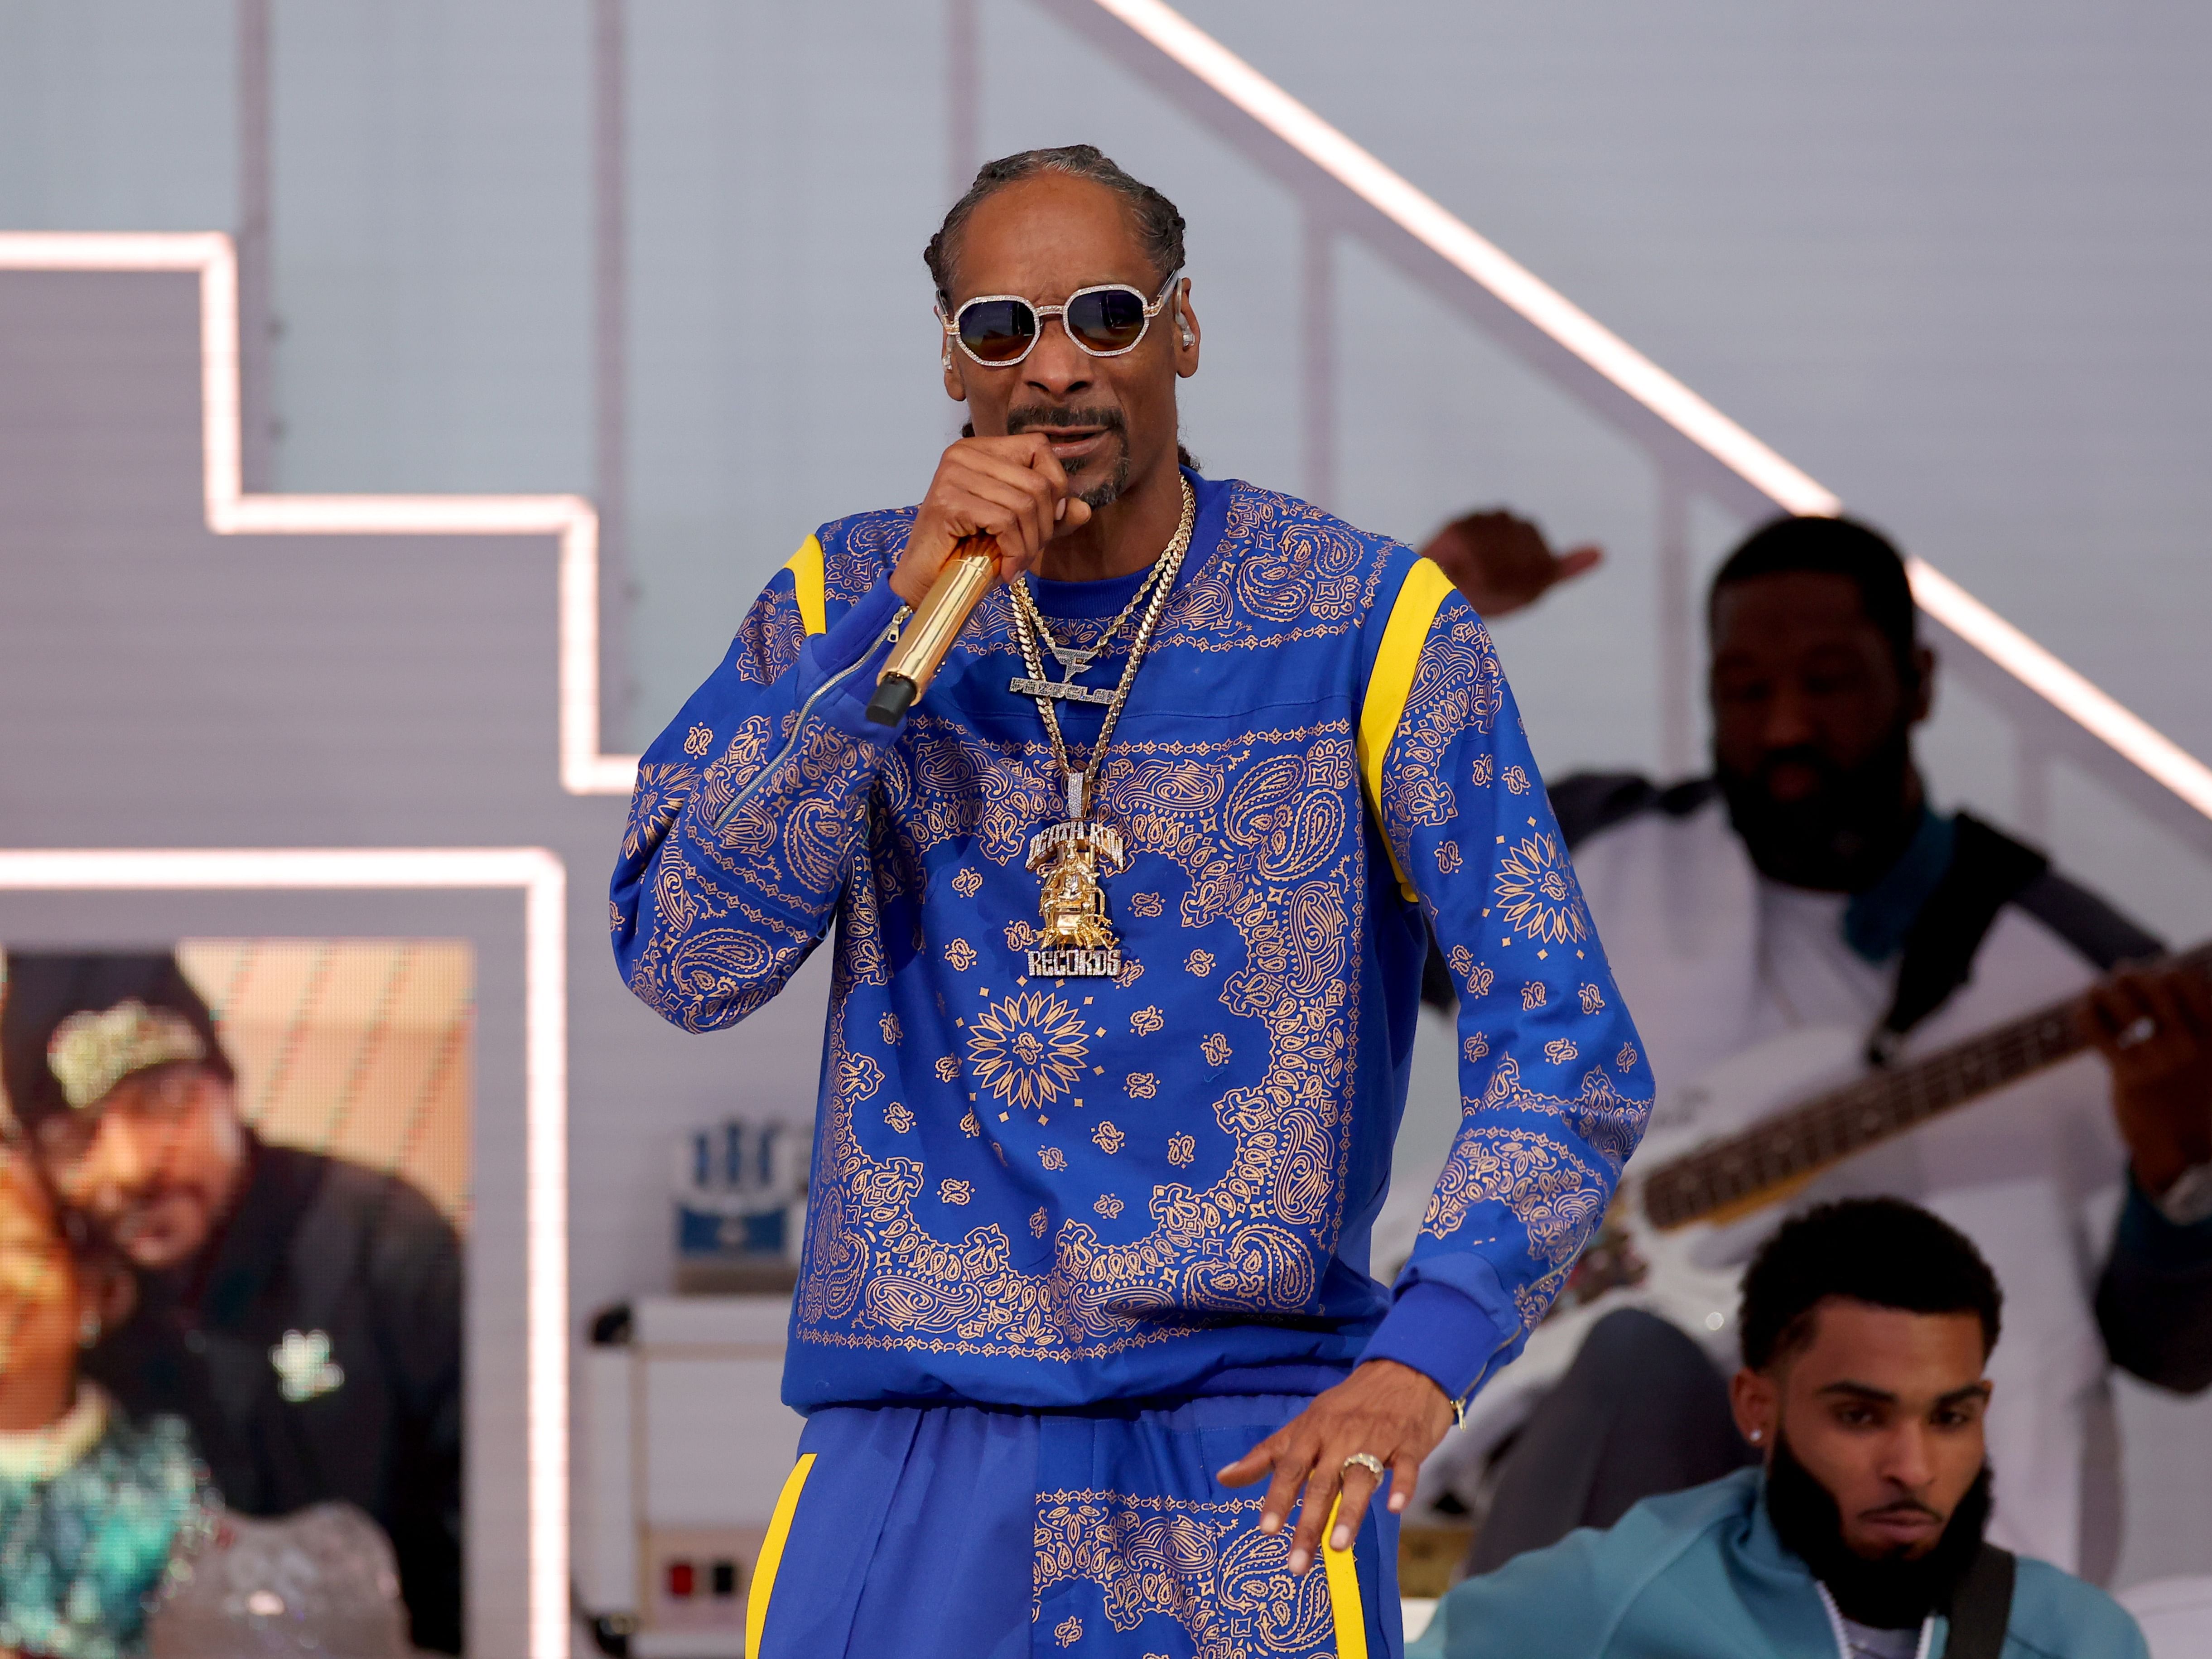 Big time LA Lakers fan - rap star Snoop Dogg 